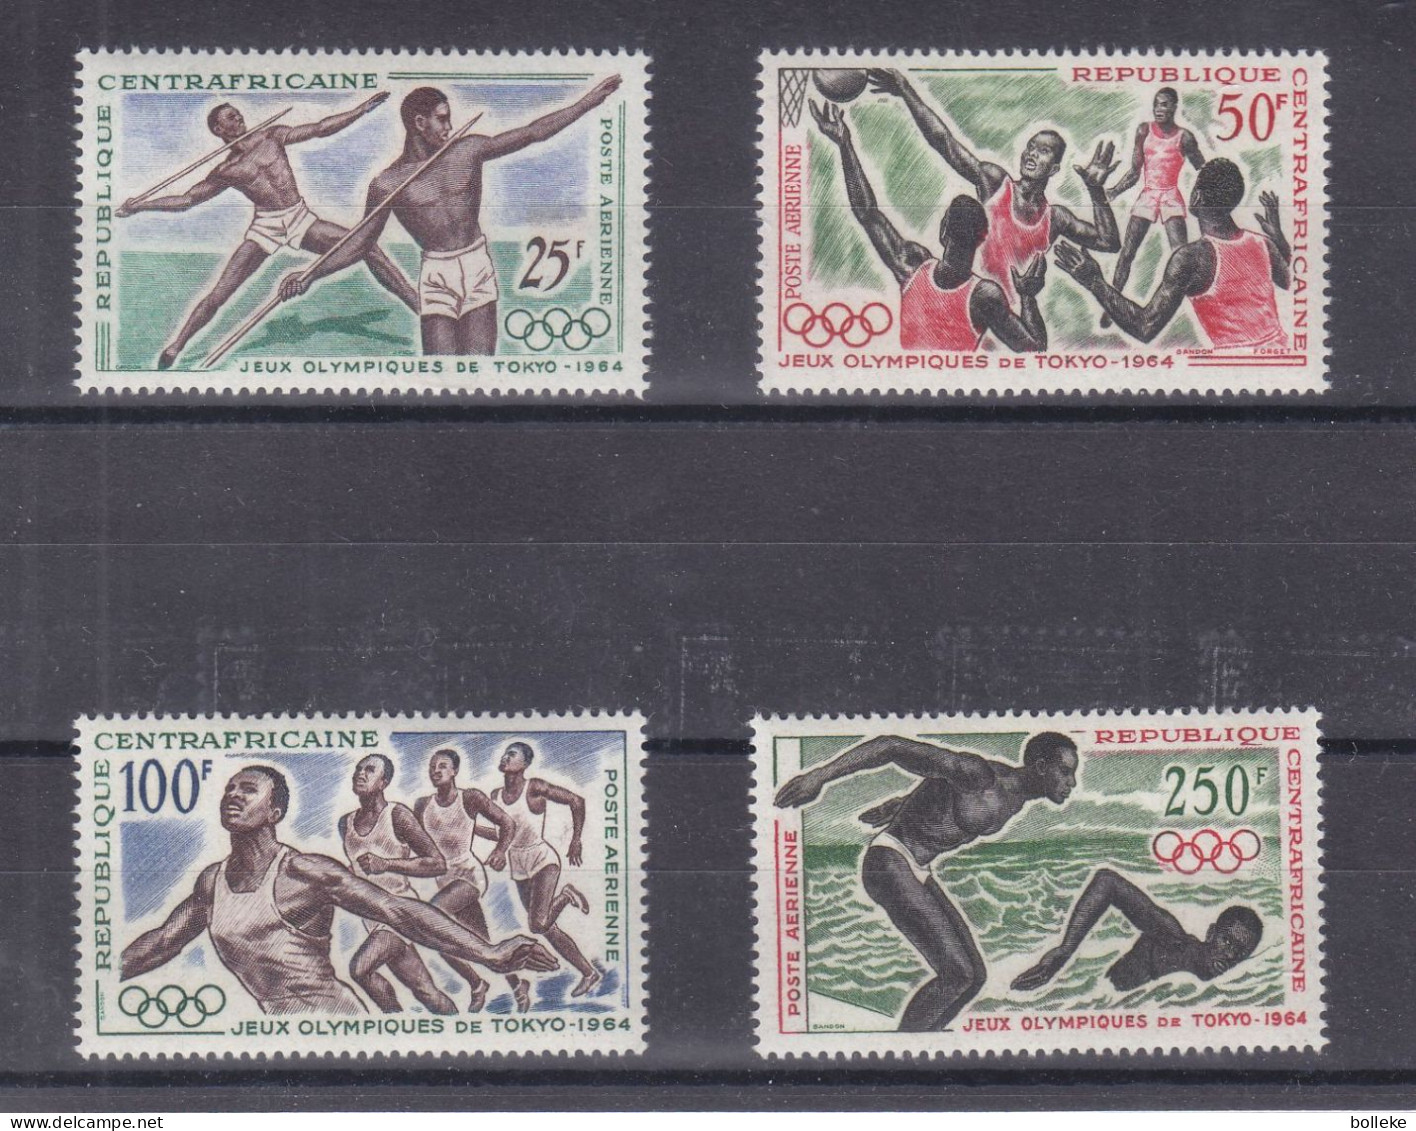 Jeux Olympiques - Tokyo 64 - Centreafricaine - Yvert PA 22 / 5 ** - Javelot - Basket - Natation - Valeur 12,00 Euros - Ete 1964: Tokyo